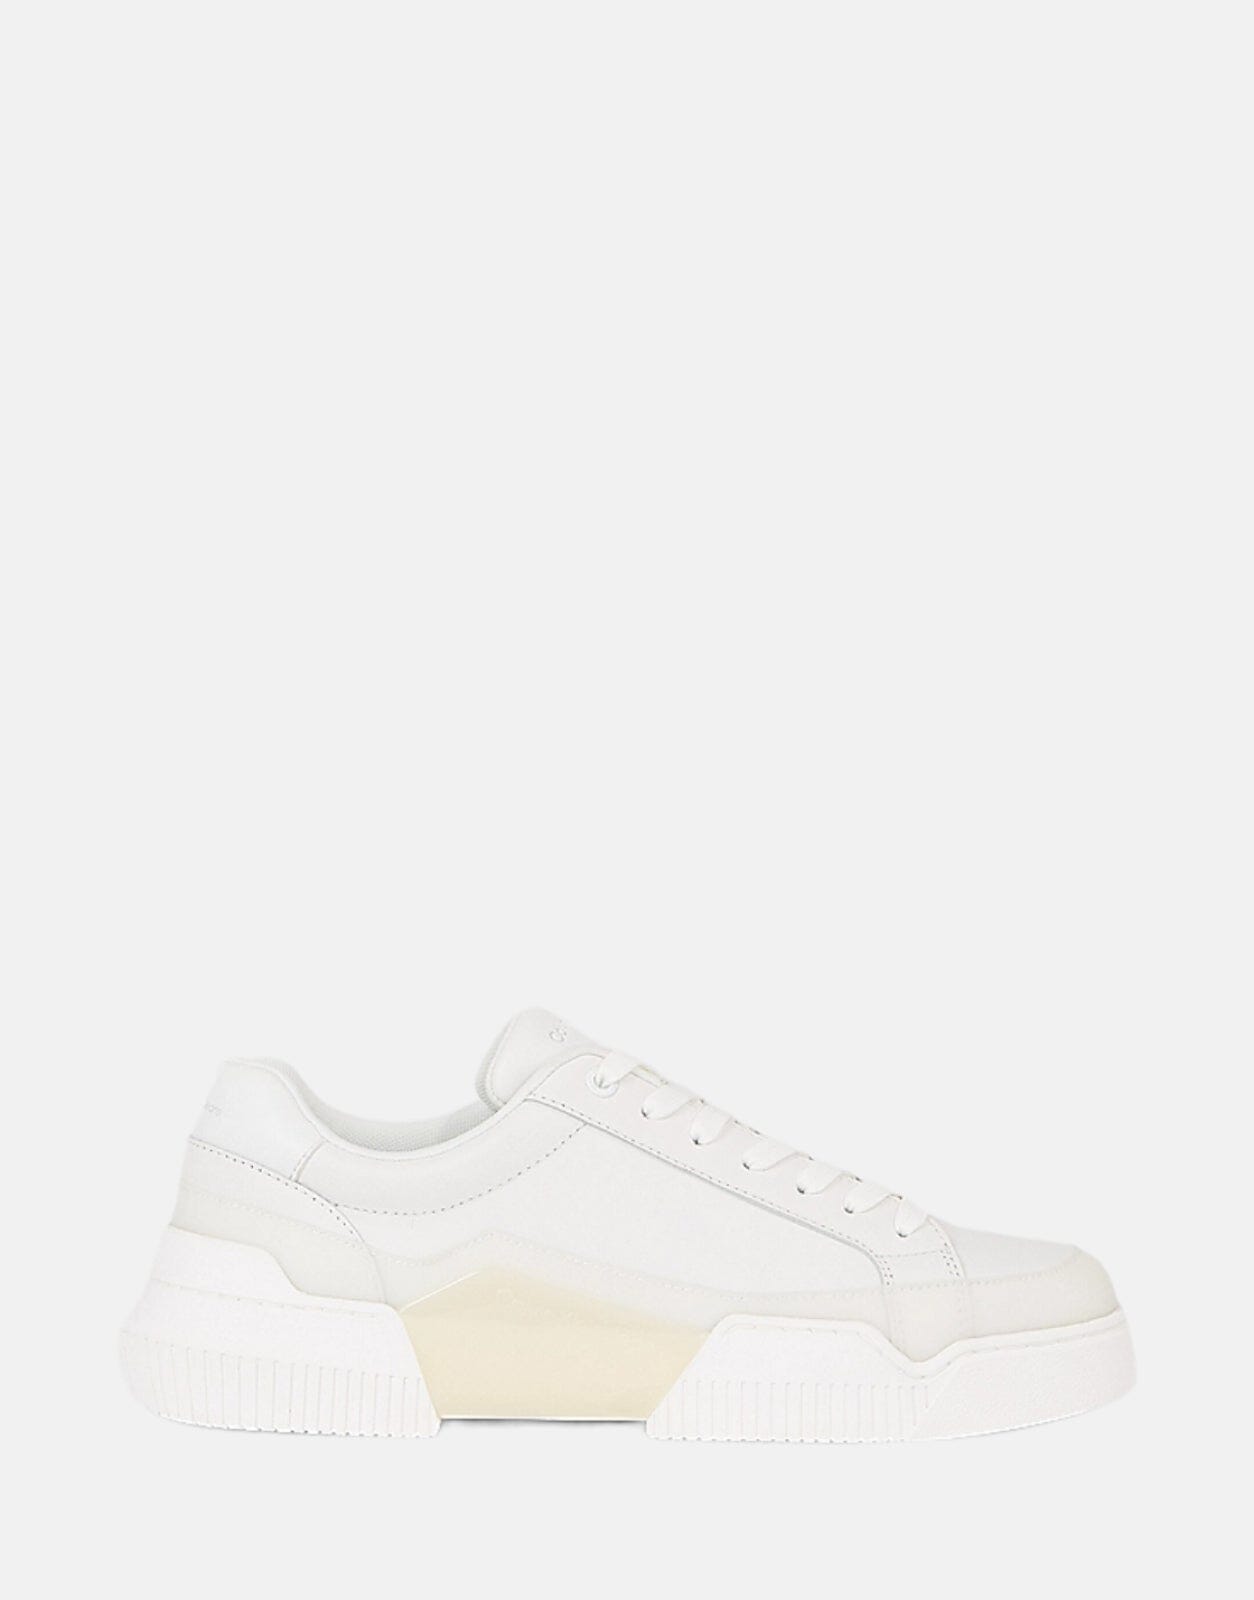 Calvin Klein Chunky Cupsole 2.0 White Sneakers, UK8 / White